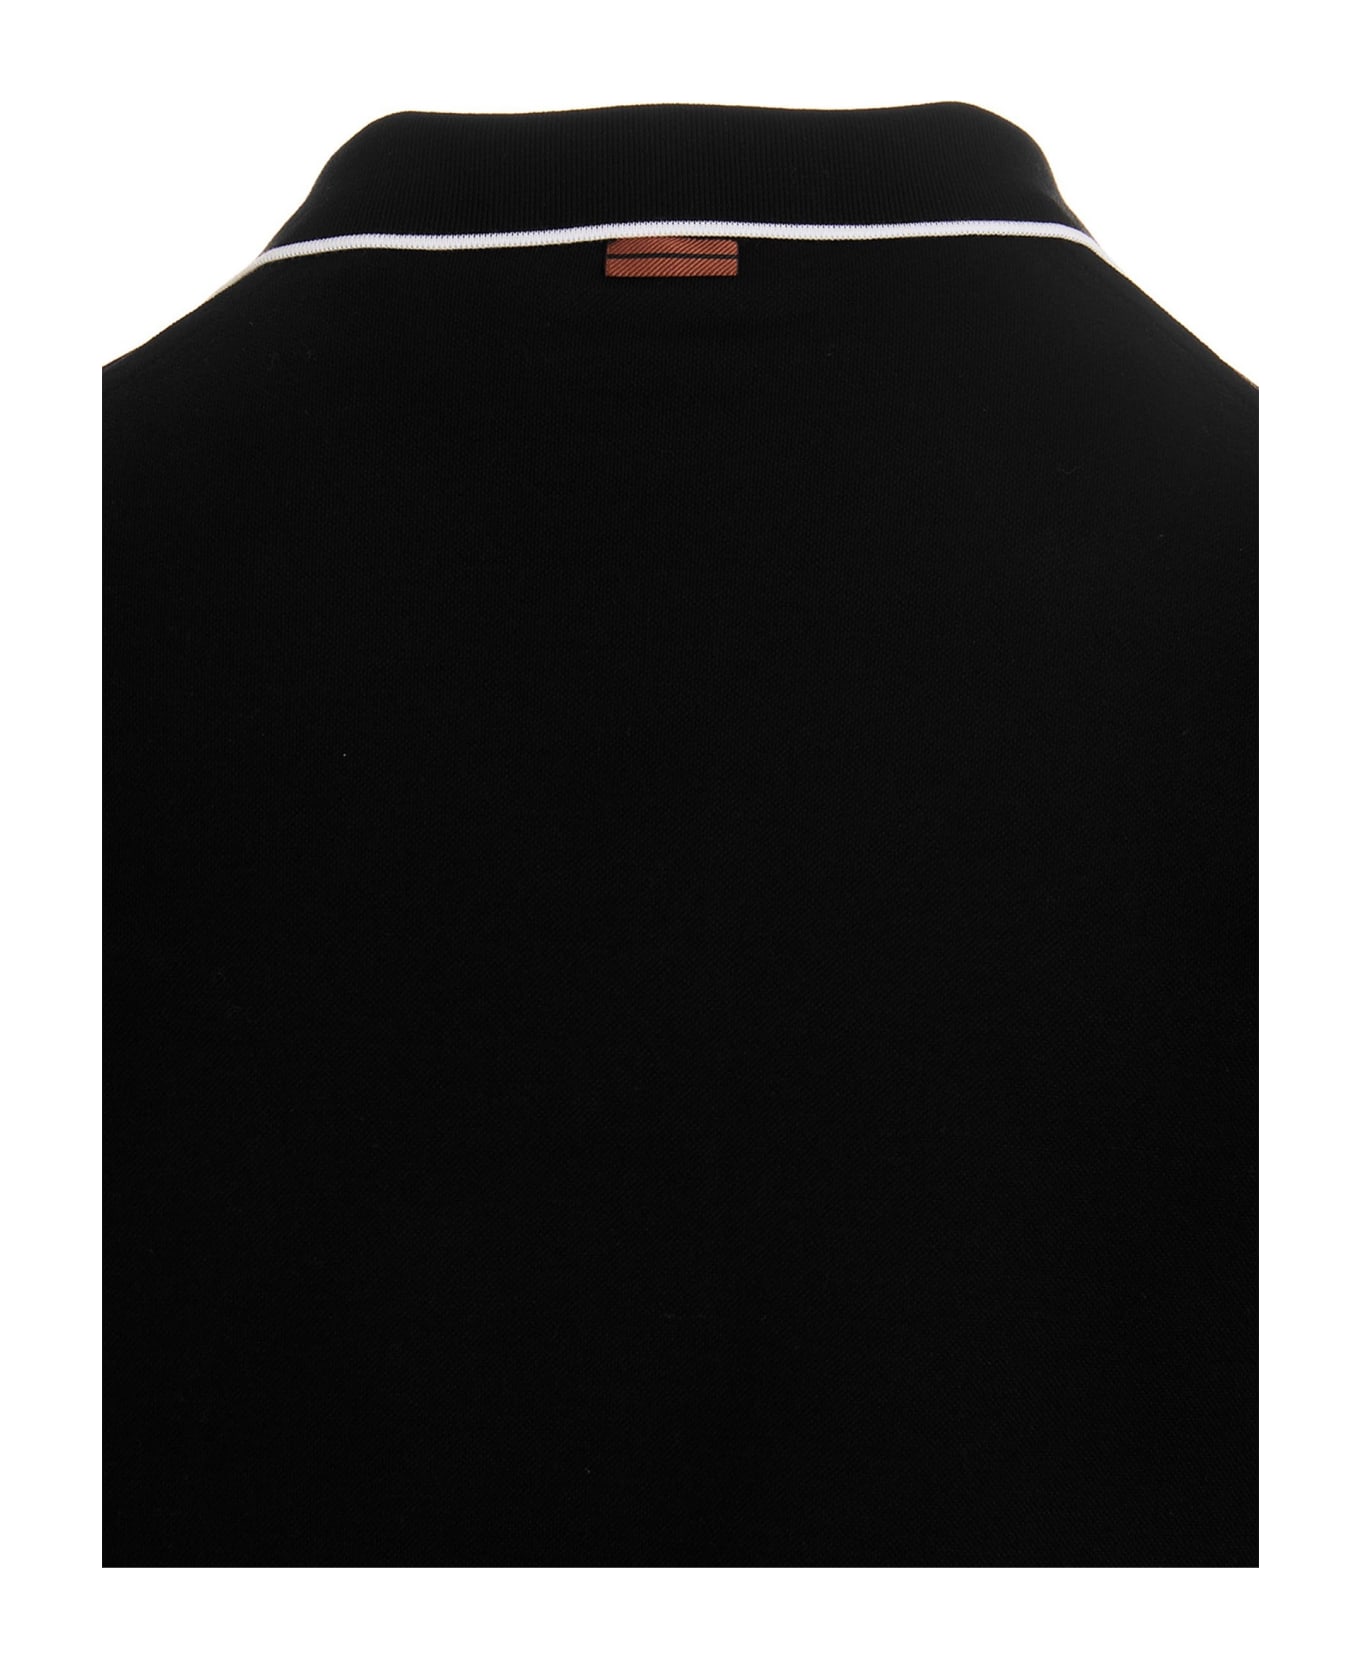 Zegna Embroidered Logo Polo Shirt - Black  